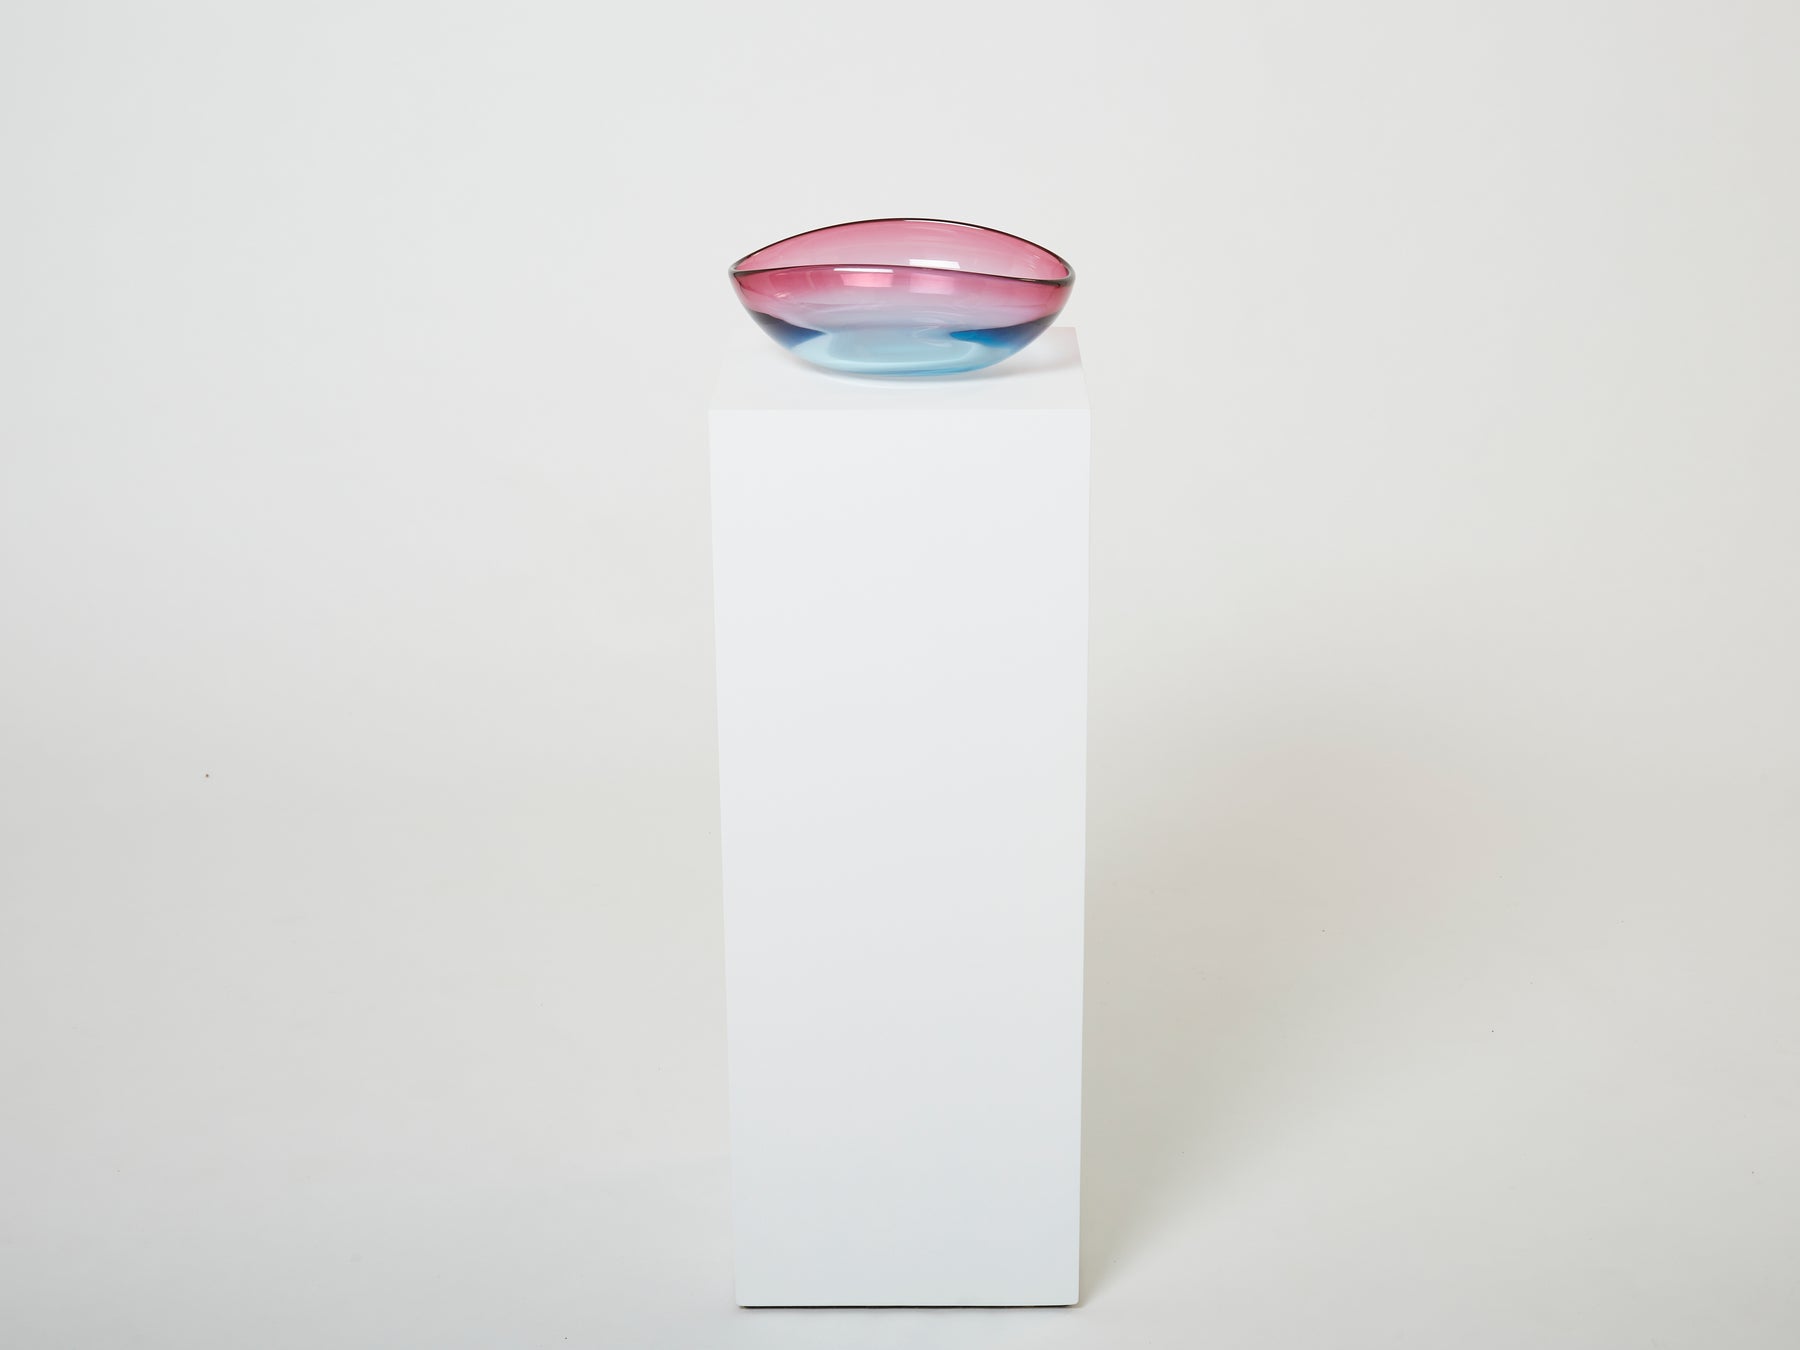 Flavio Poli large bowl centerpiece Murano glass for Seguso 1960